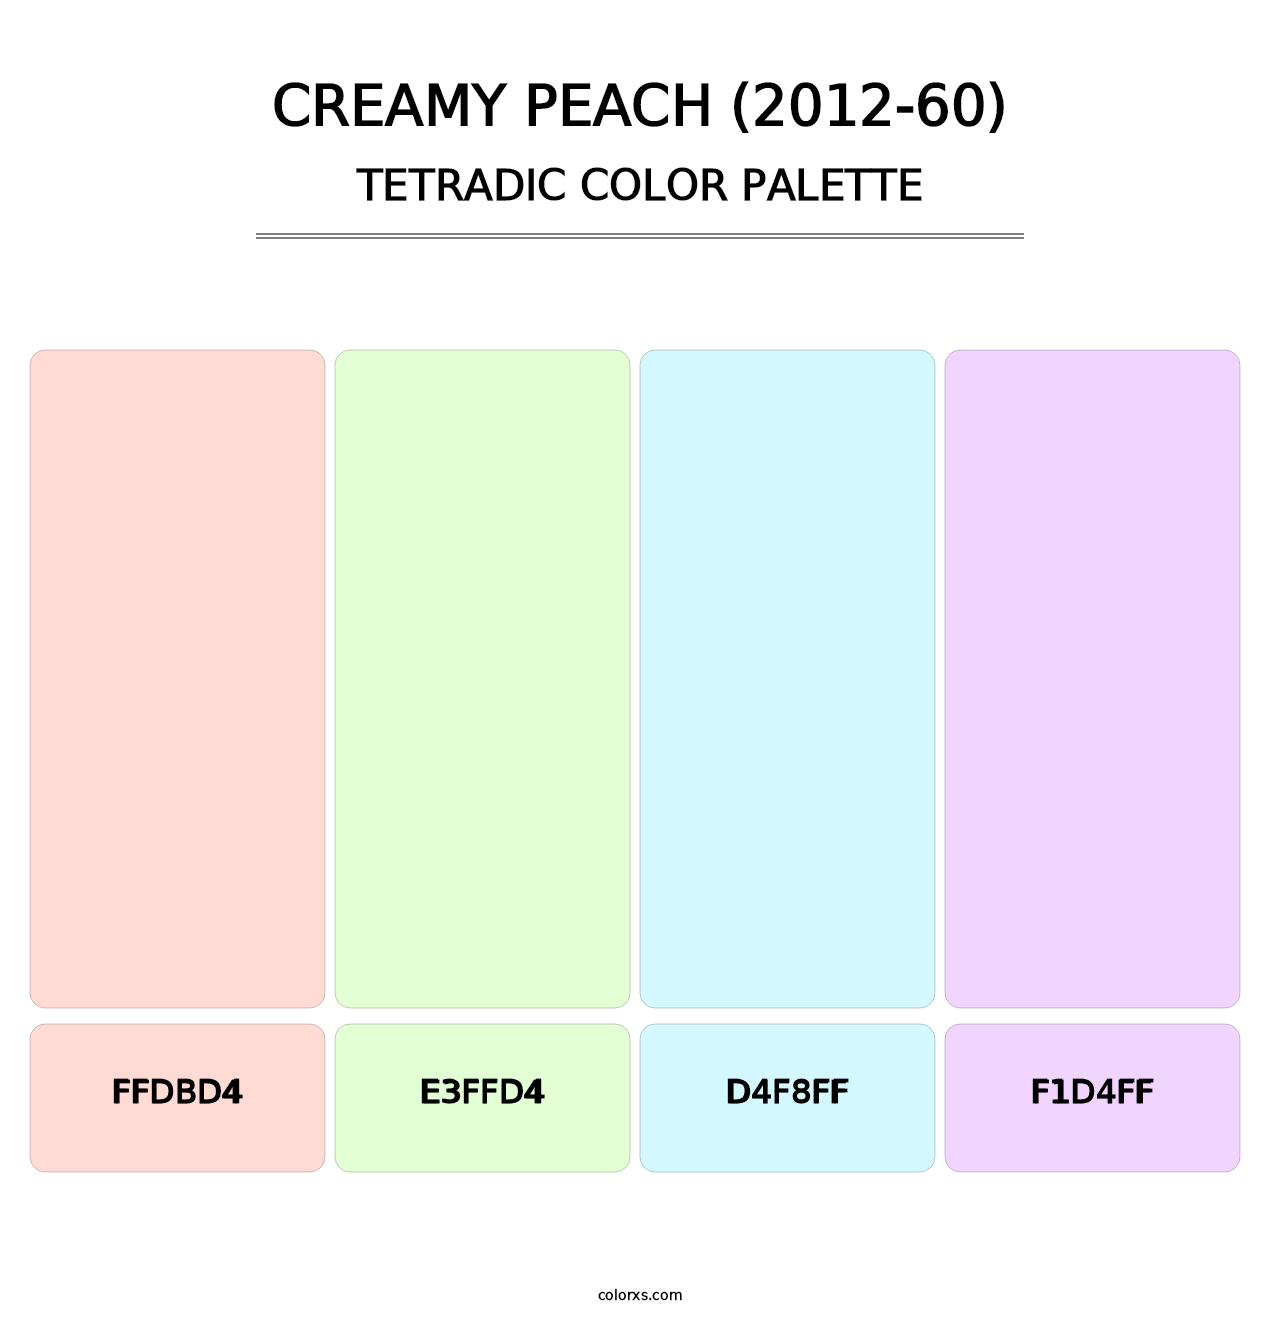 Creamy Peach (2012-60) - Tetradic Color Palette